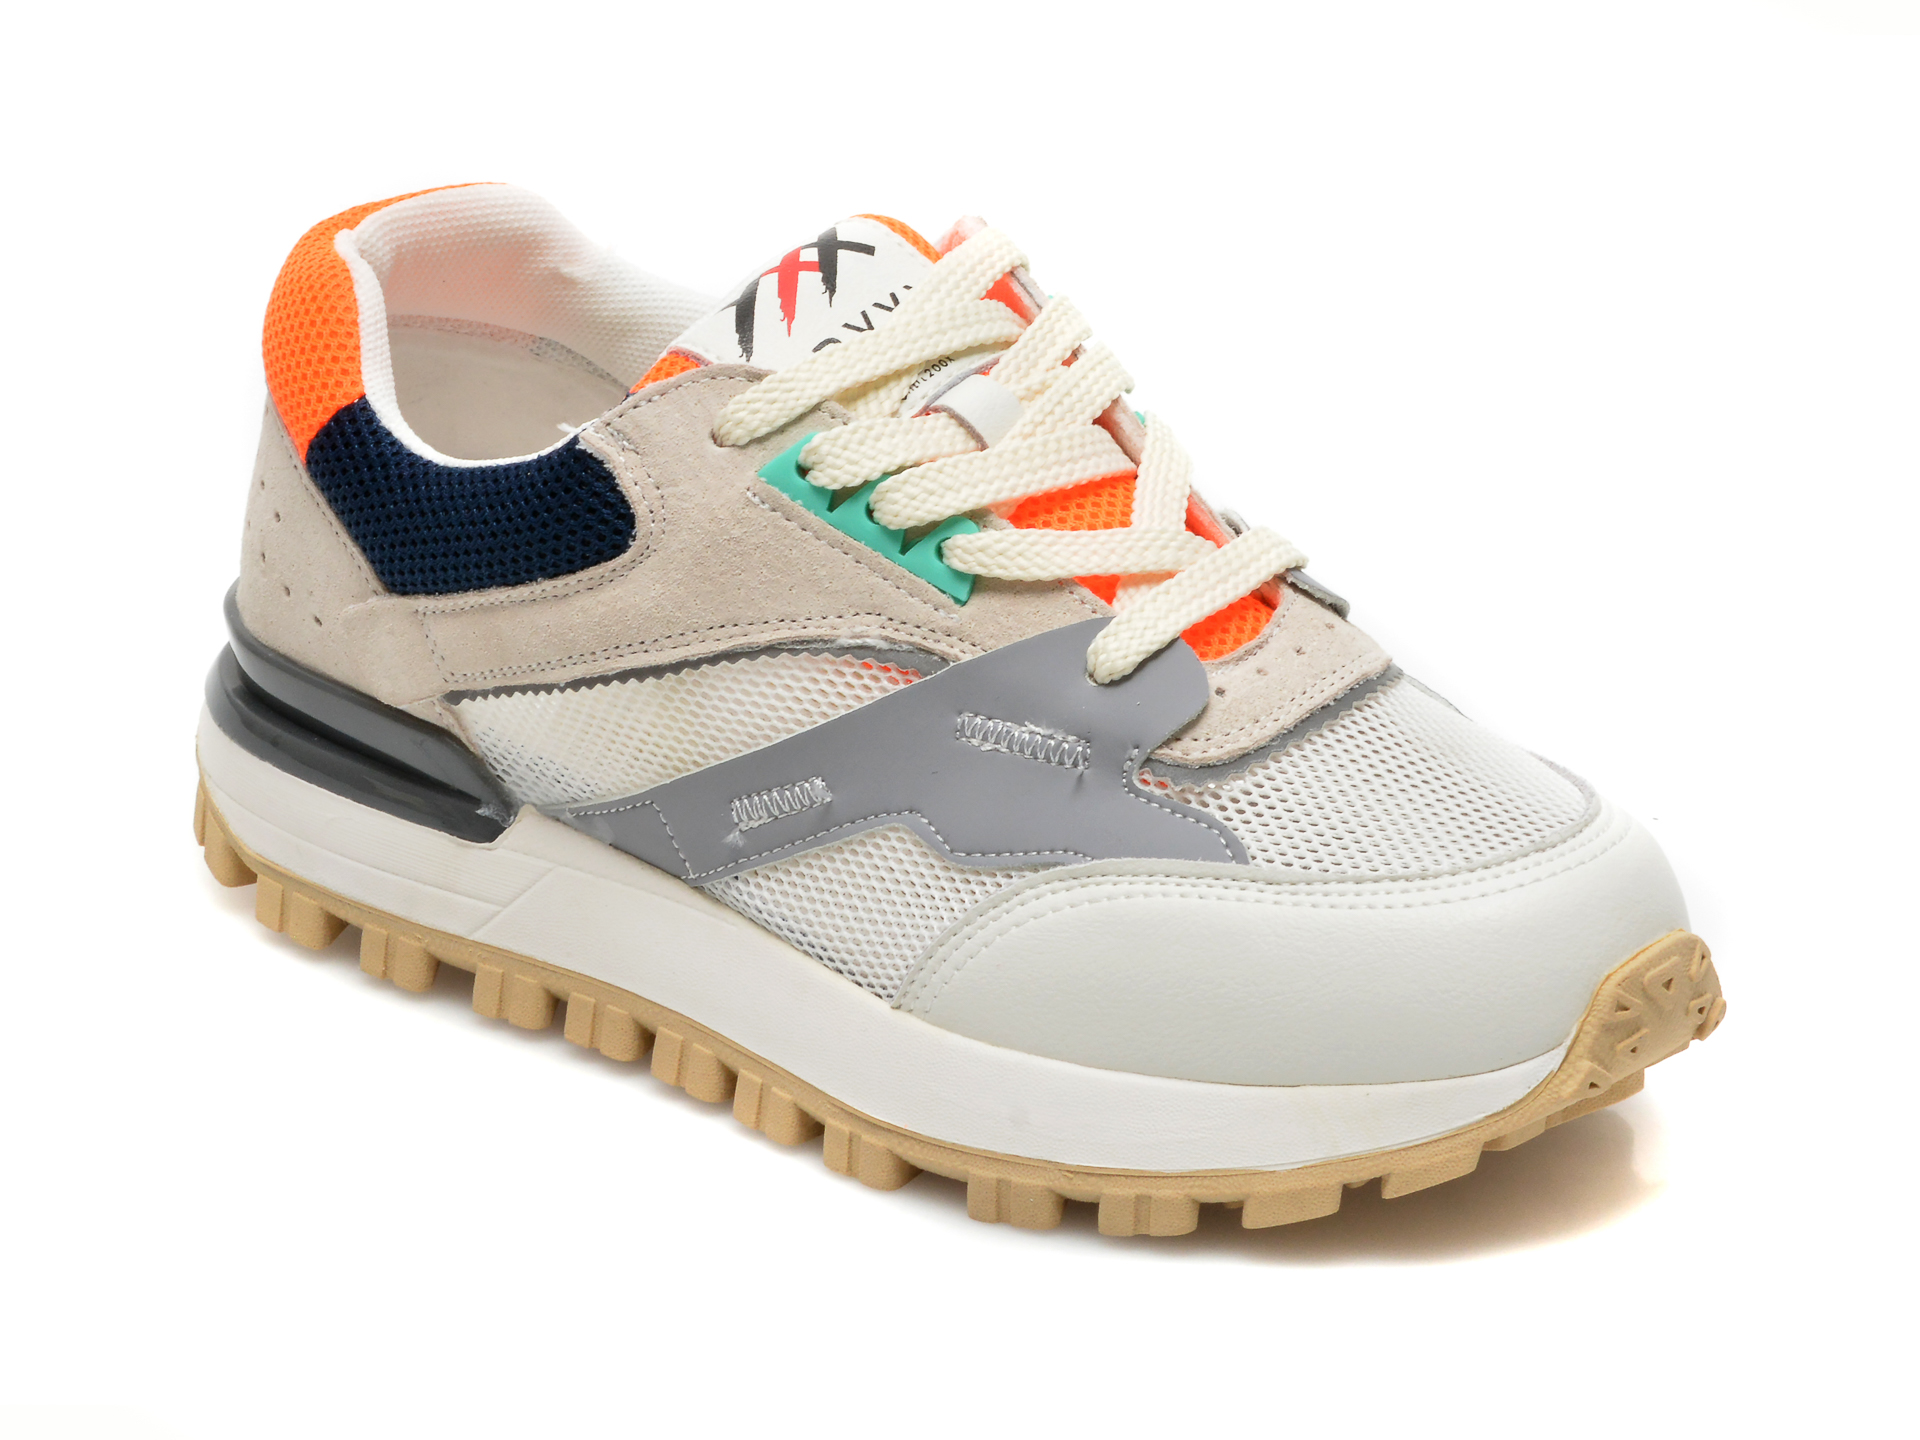 Pantofi Sport Gryxx Multicolori, 21112, Din Material Textil Si Piele Intoarsa